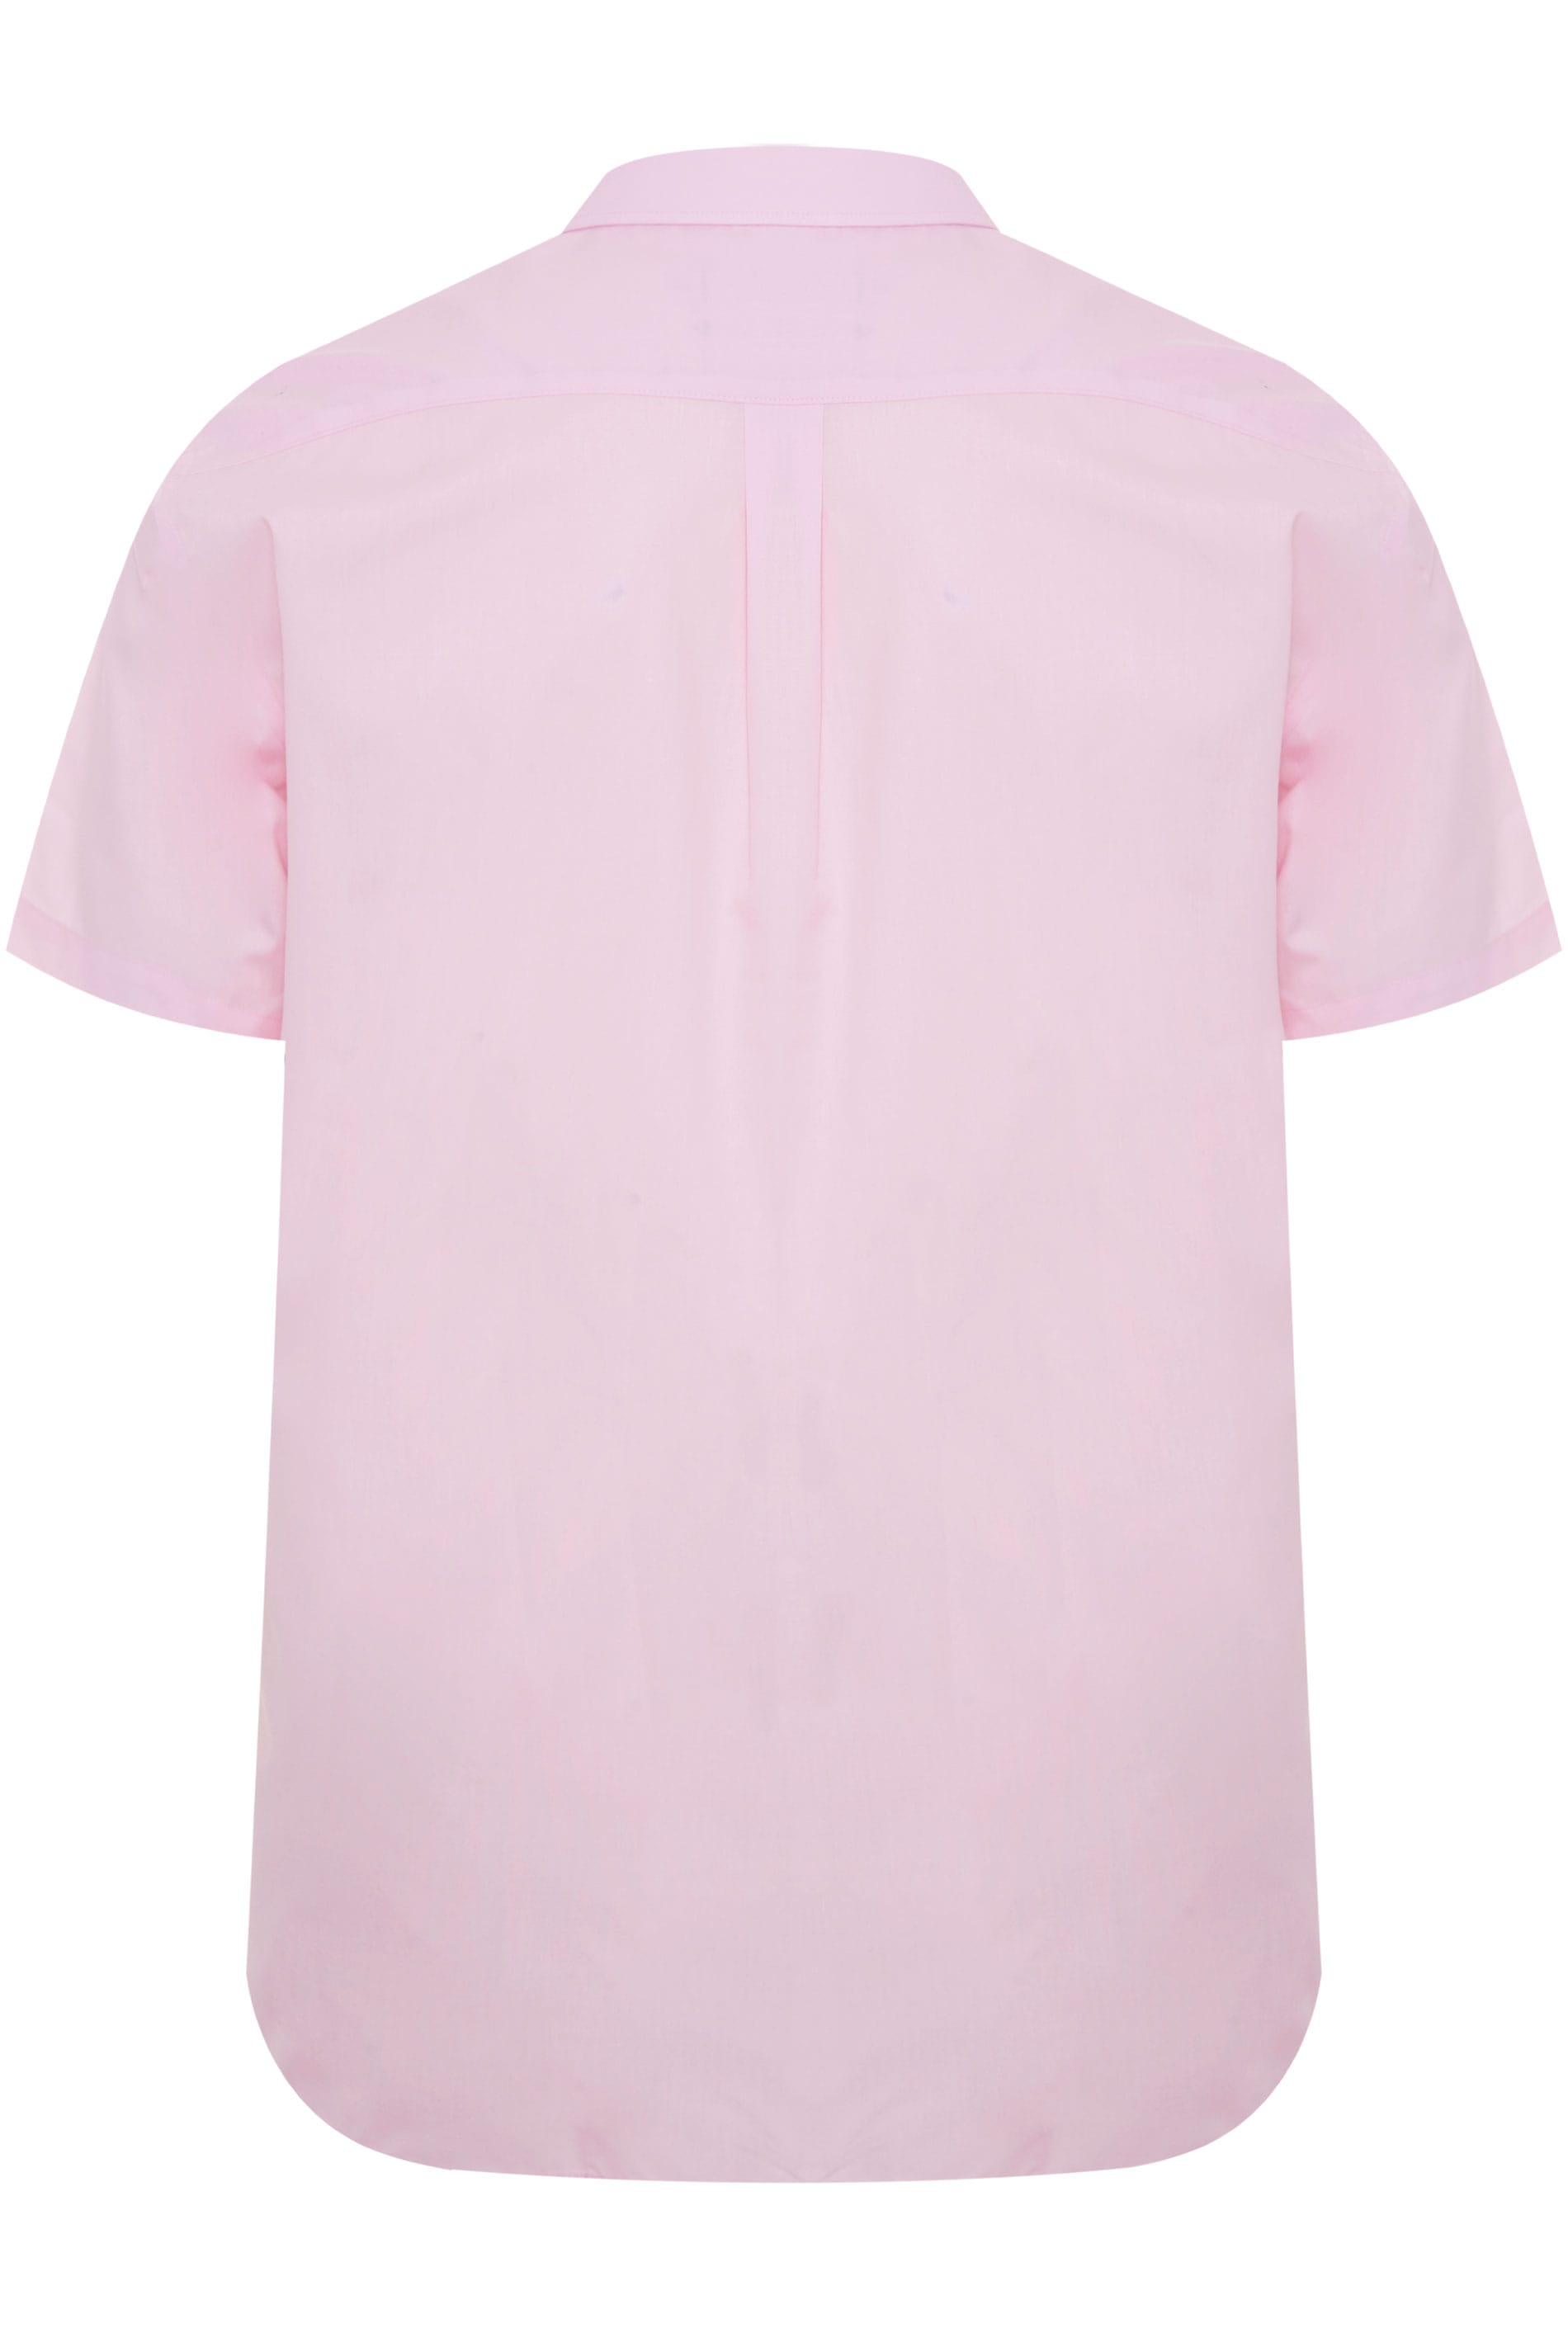 DOUBLE TWO Pink Non-Iron Short Sleeve Shirt | BadRhino